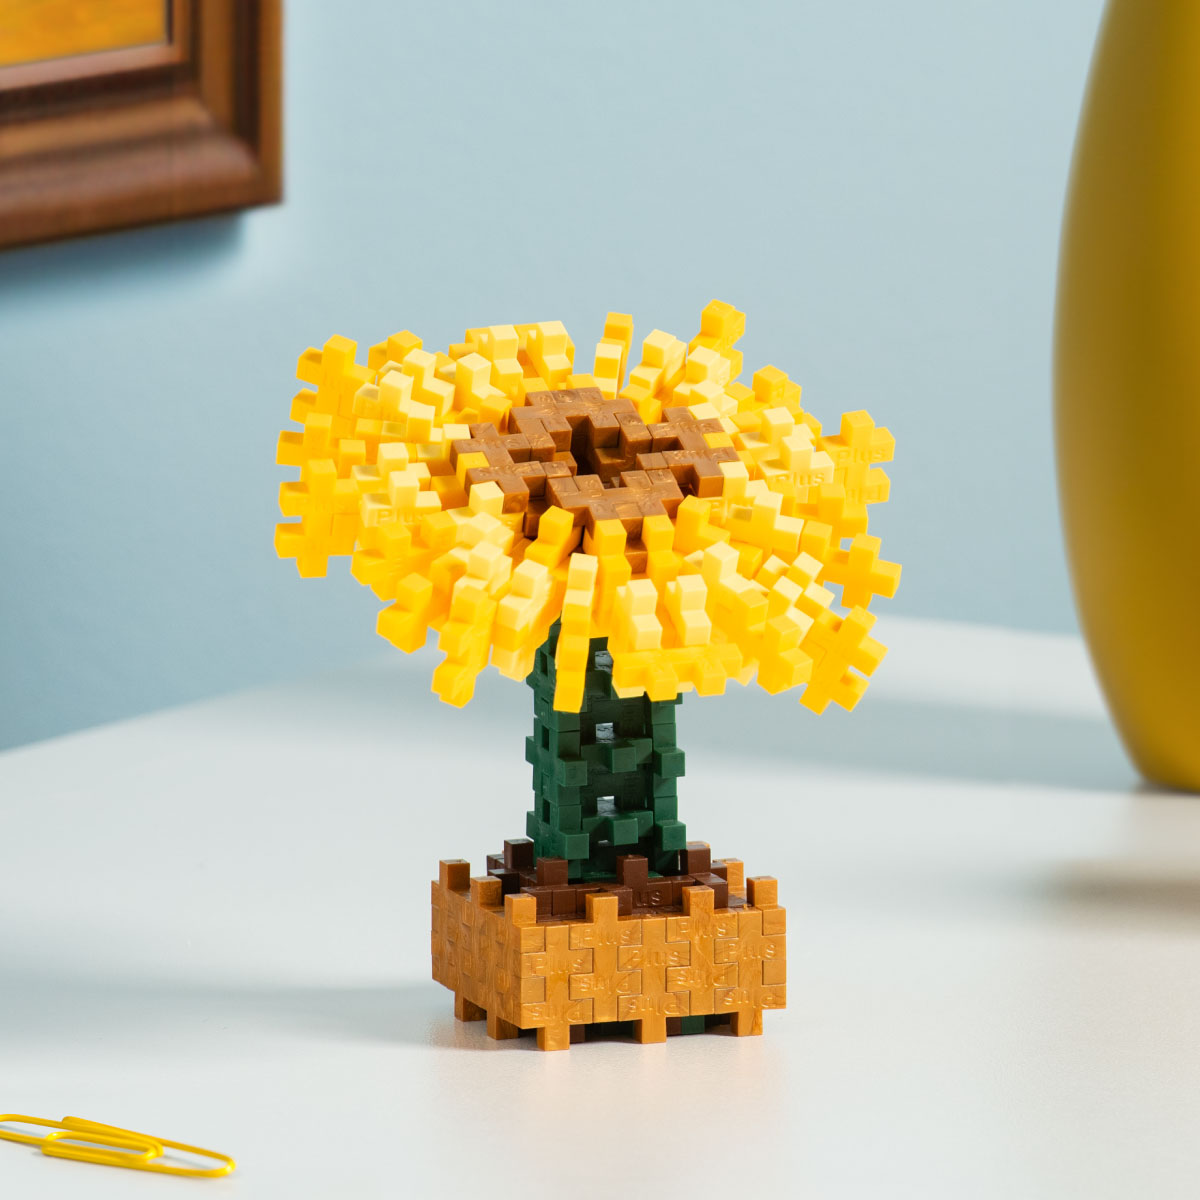 Plus-Plus Inspired: Van Gogh, Sunflowers